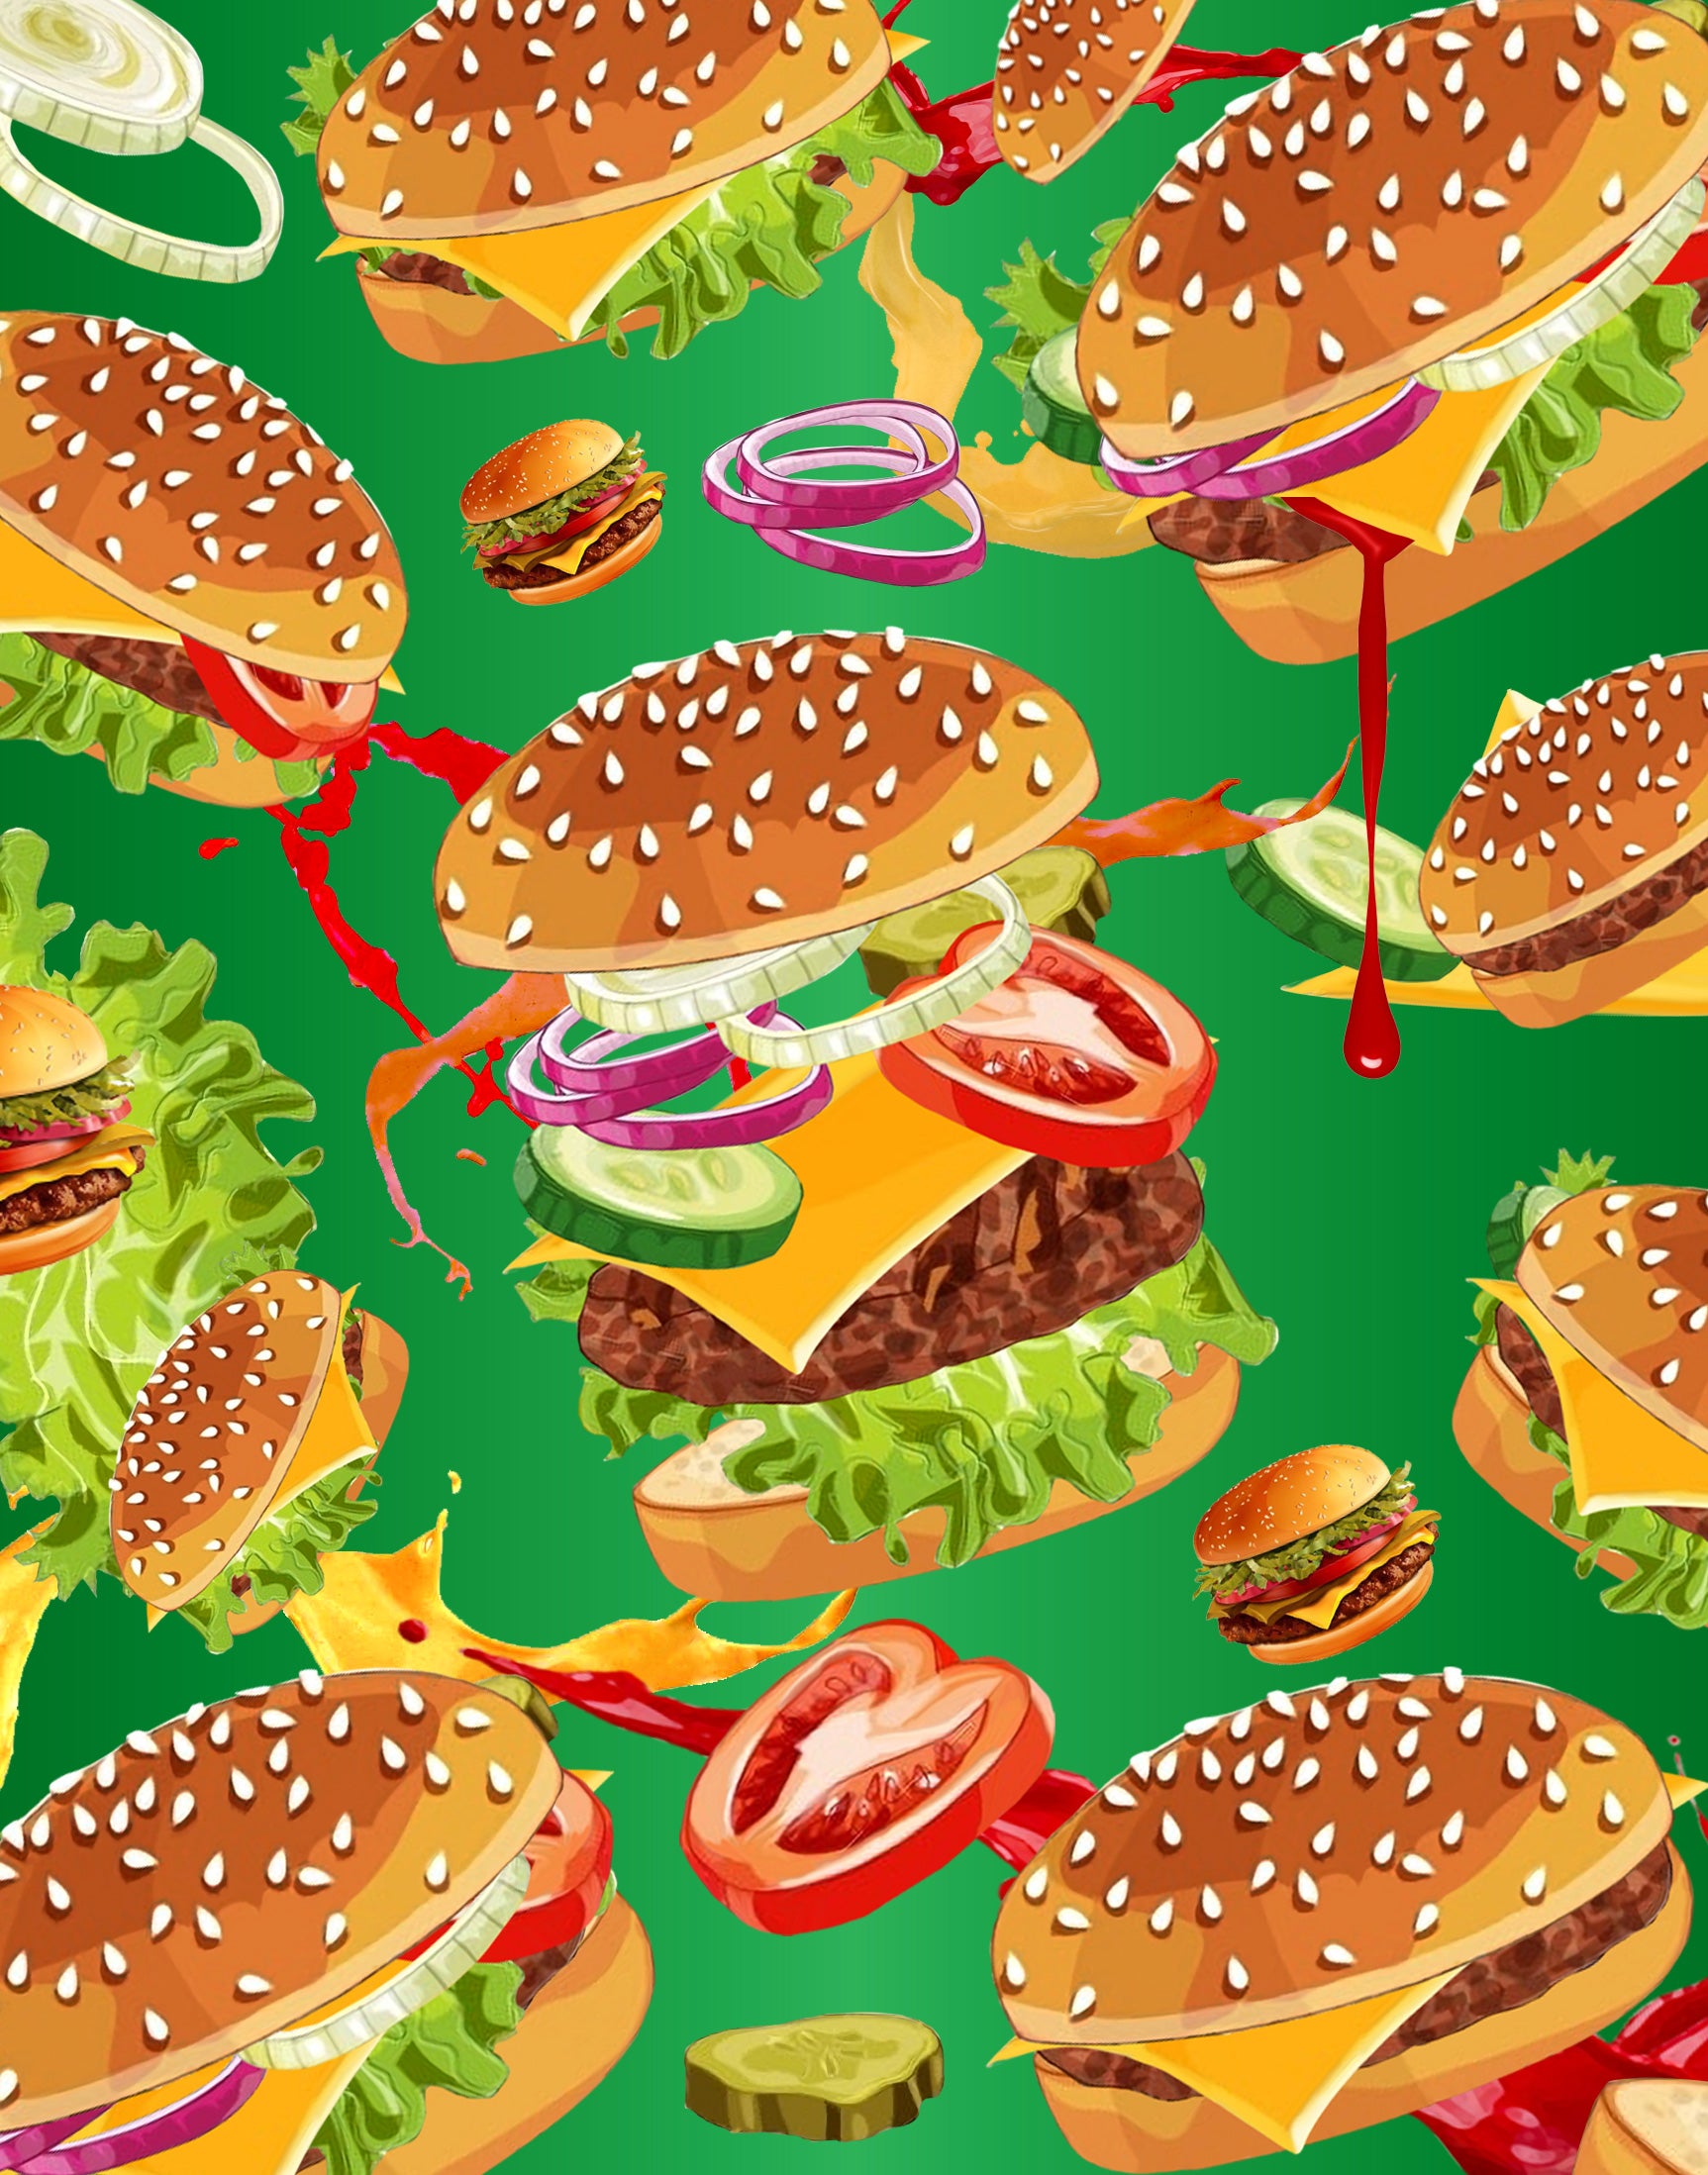 Burger - Puzzleyourpet